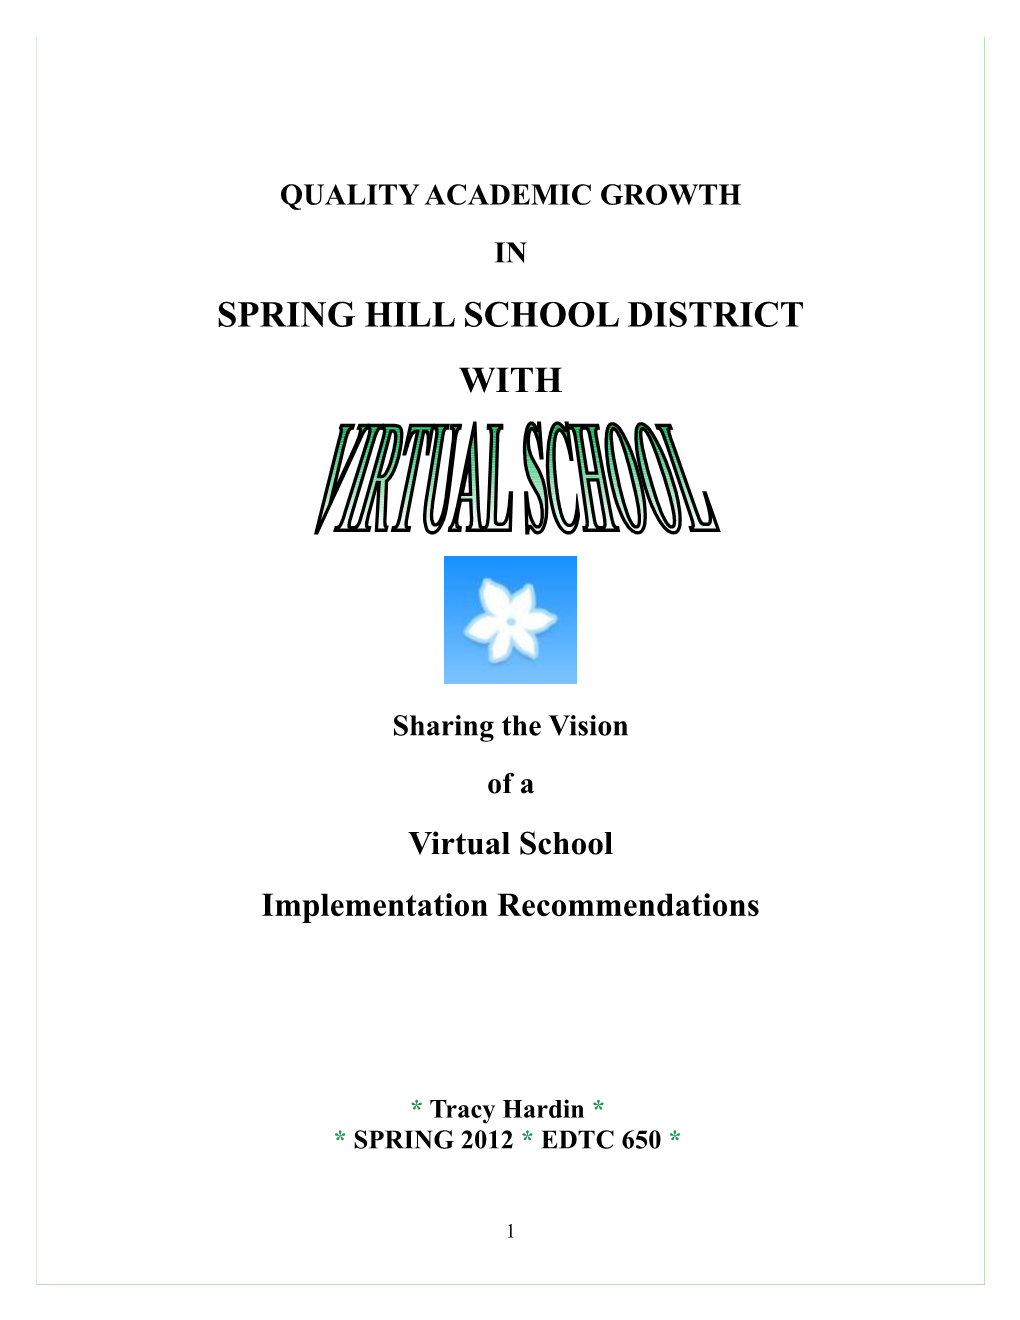 Spring Hill School District